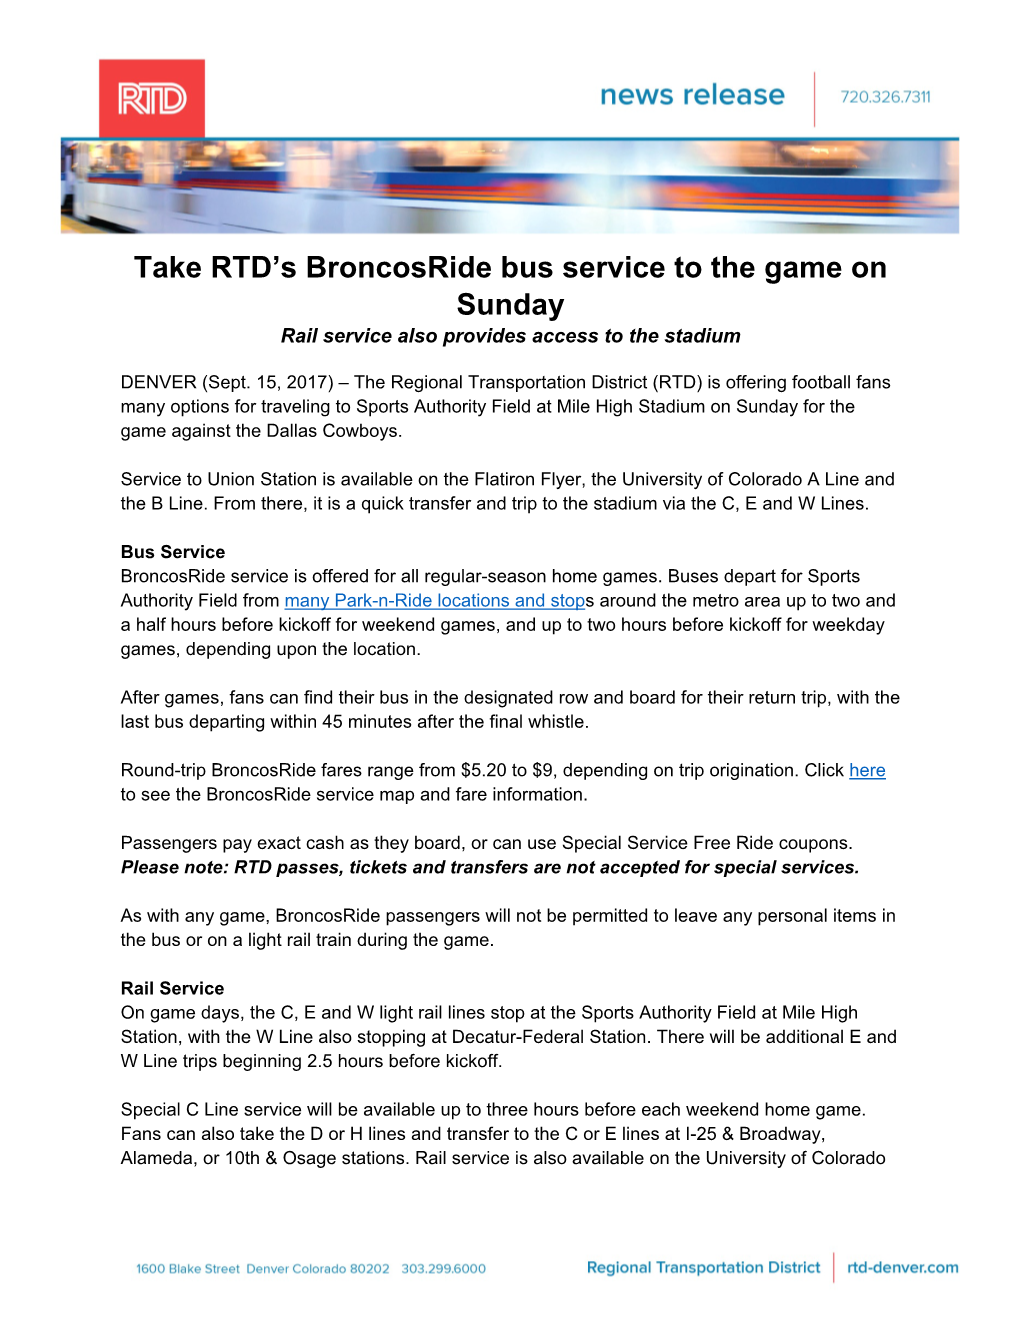 Take RTD's Broncosride Bus Service to the Game on Sunday